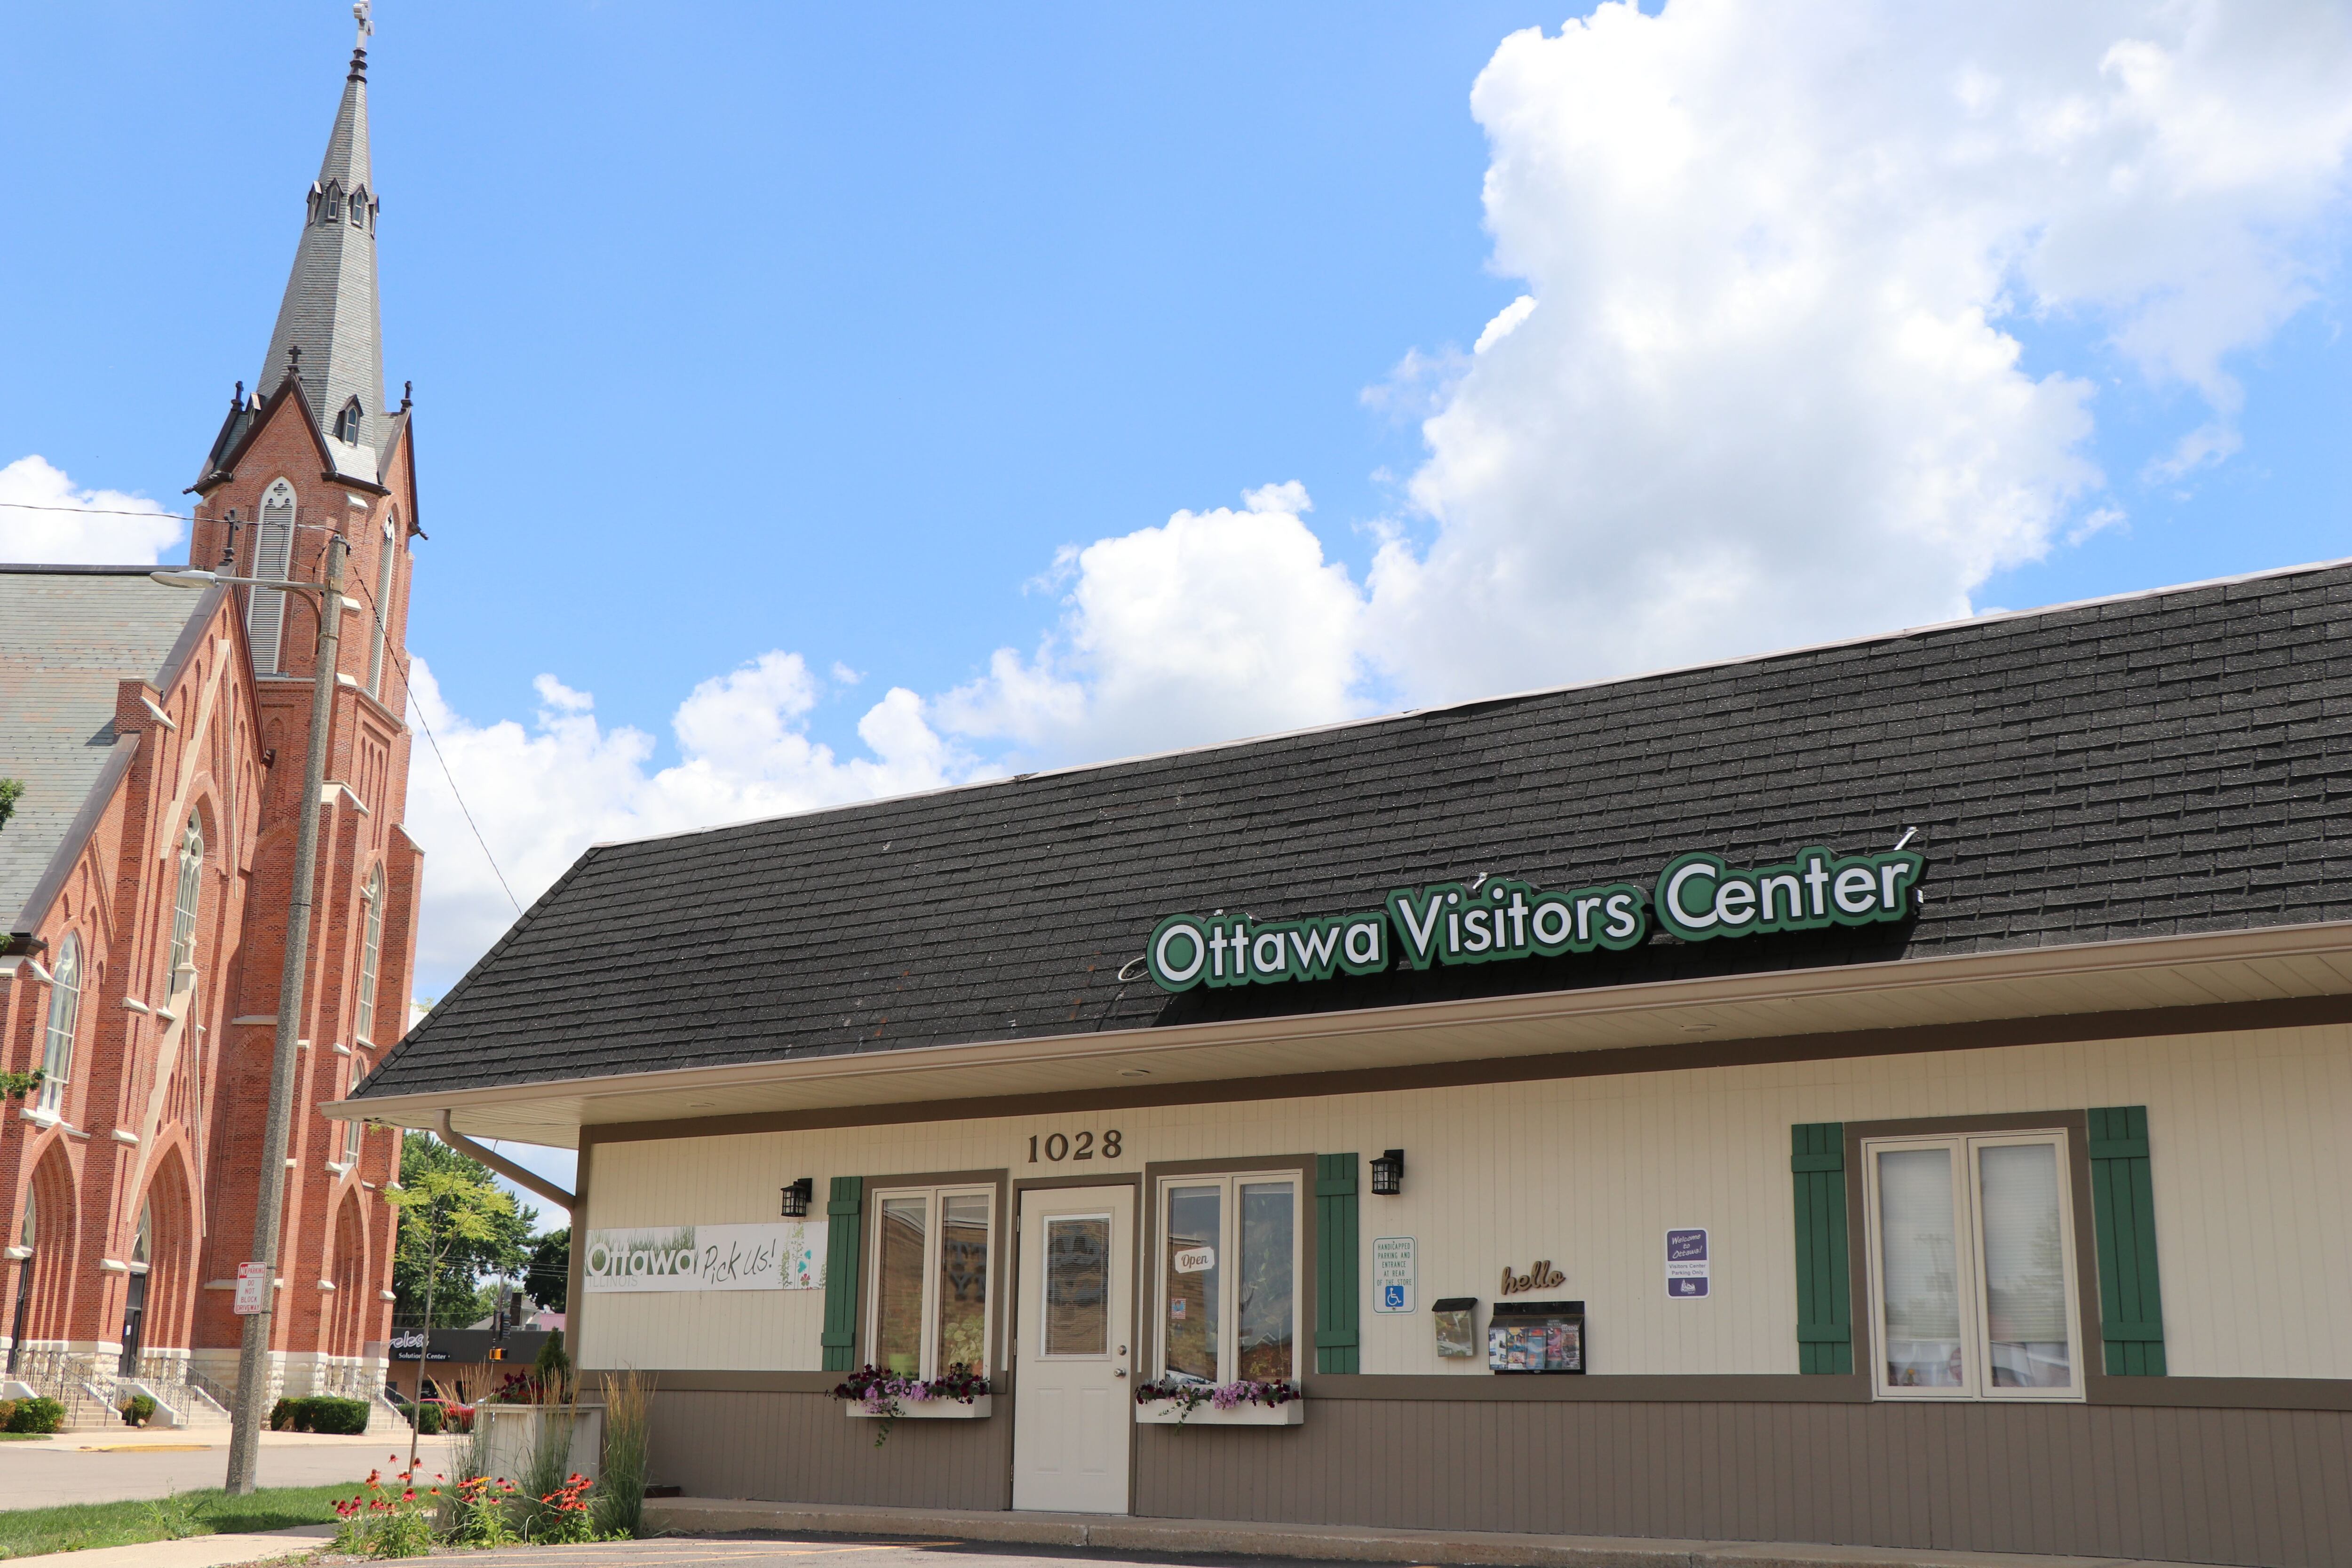 Ottawa Visitors Center - Provided by Heritage Corridor Destination